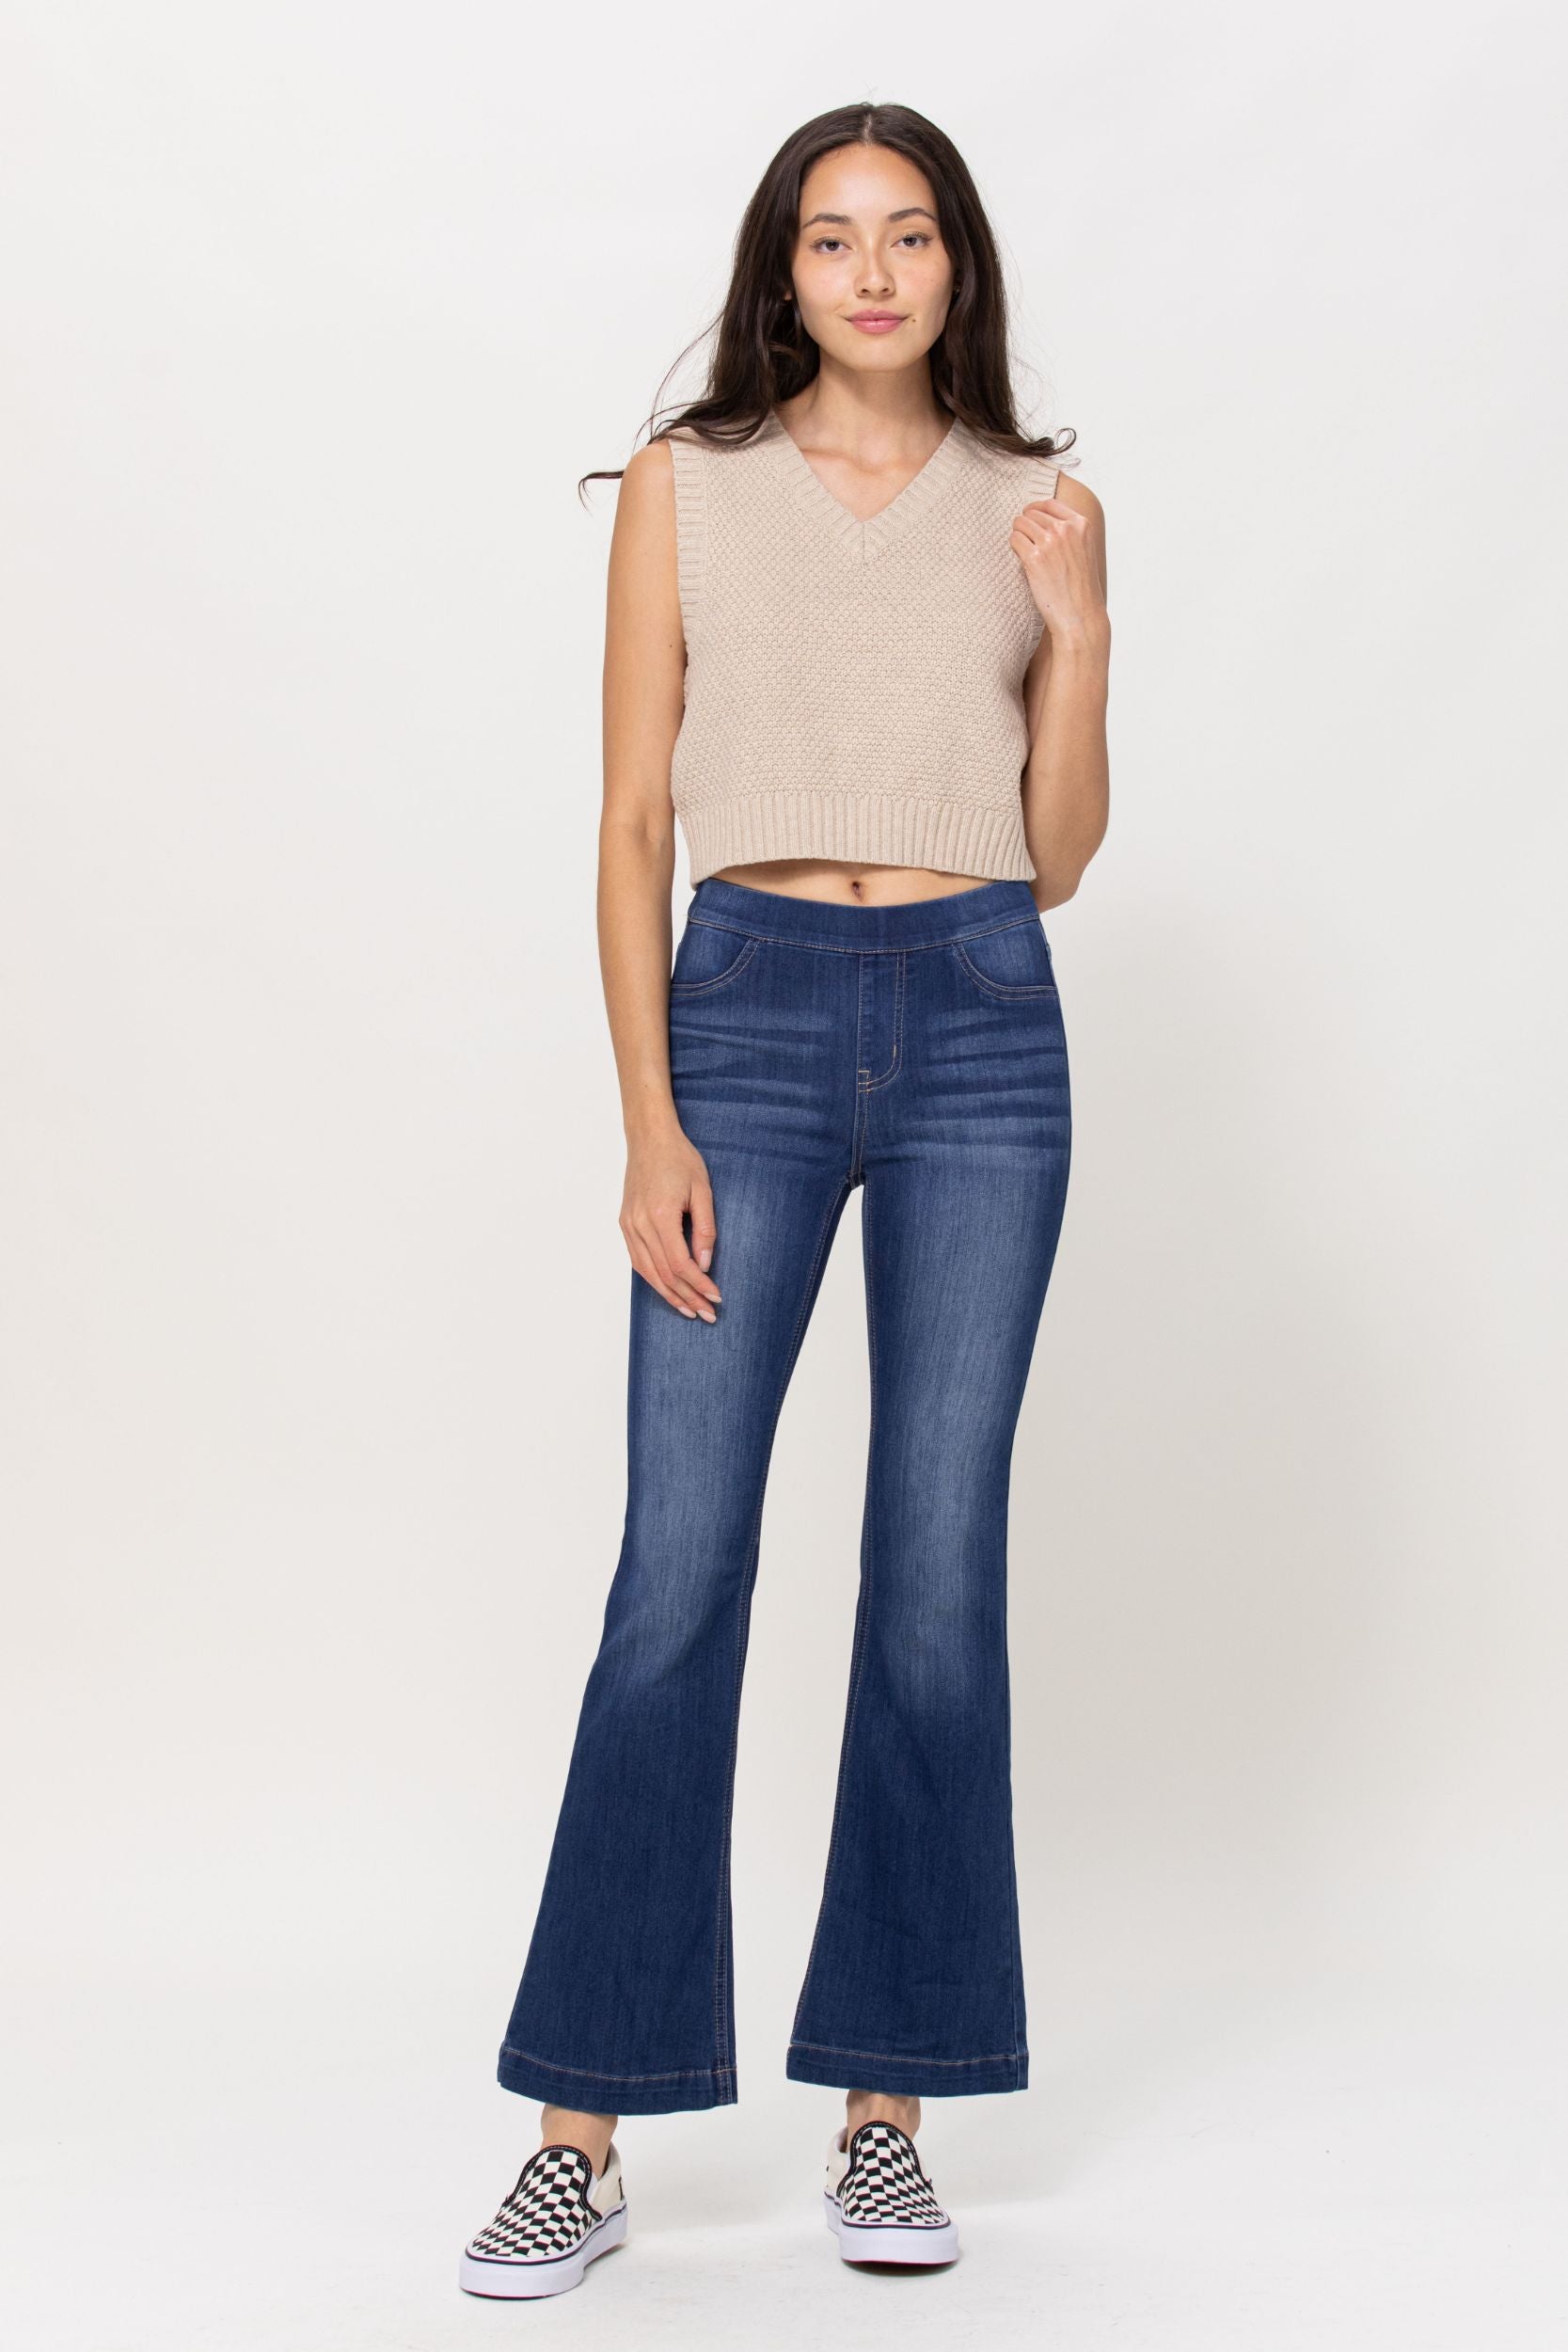 Buy Women's Flared Jeggings Jeans Online